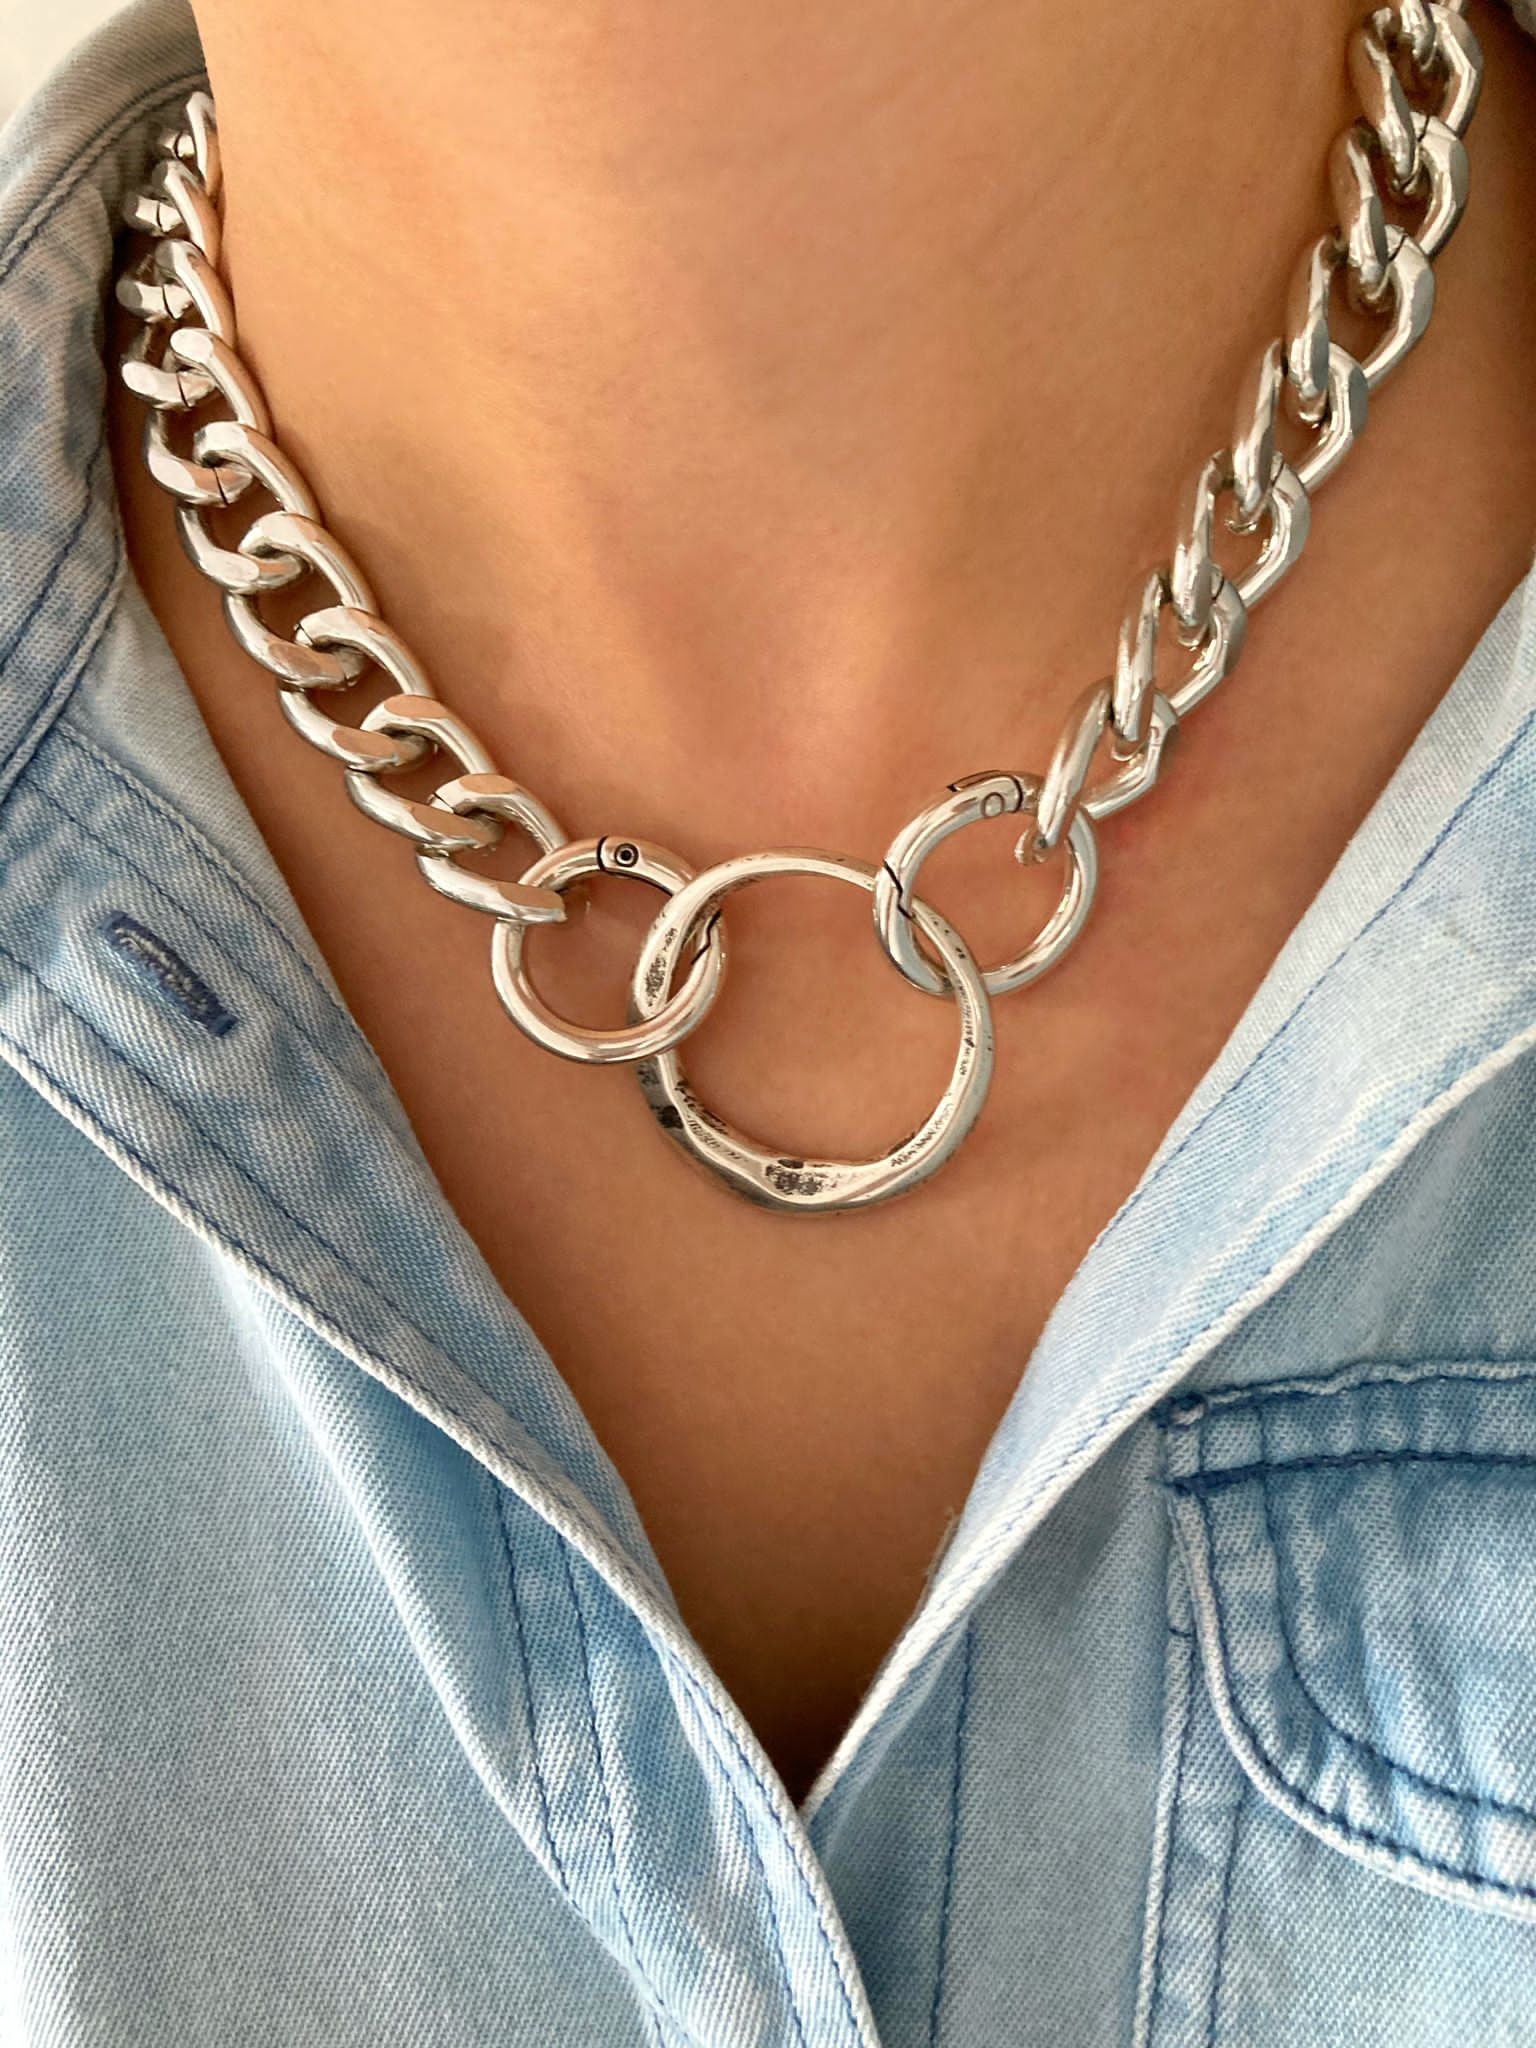 Silver Chunky Chain Necklace-Miami Cuban Chain-Biker Chain Choker -  Vanessadesigns4u